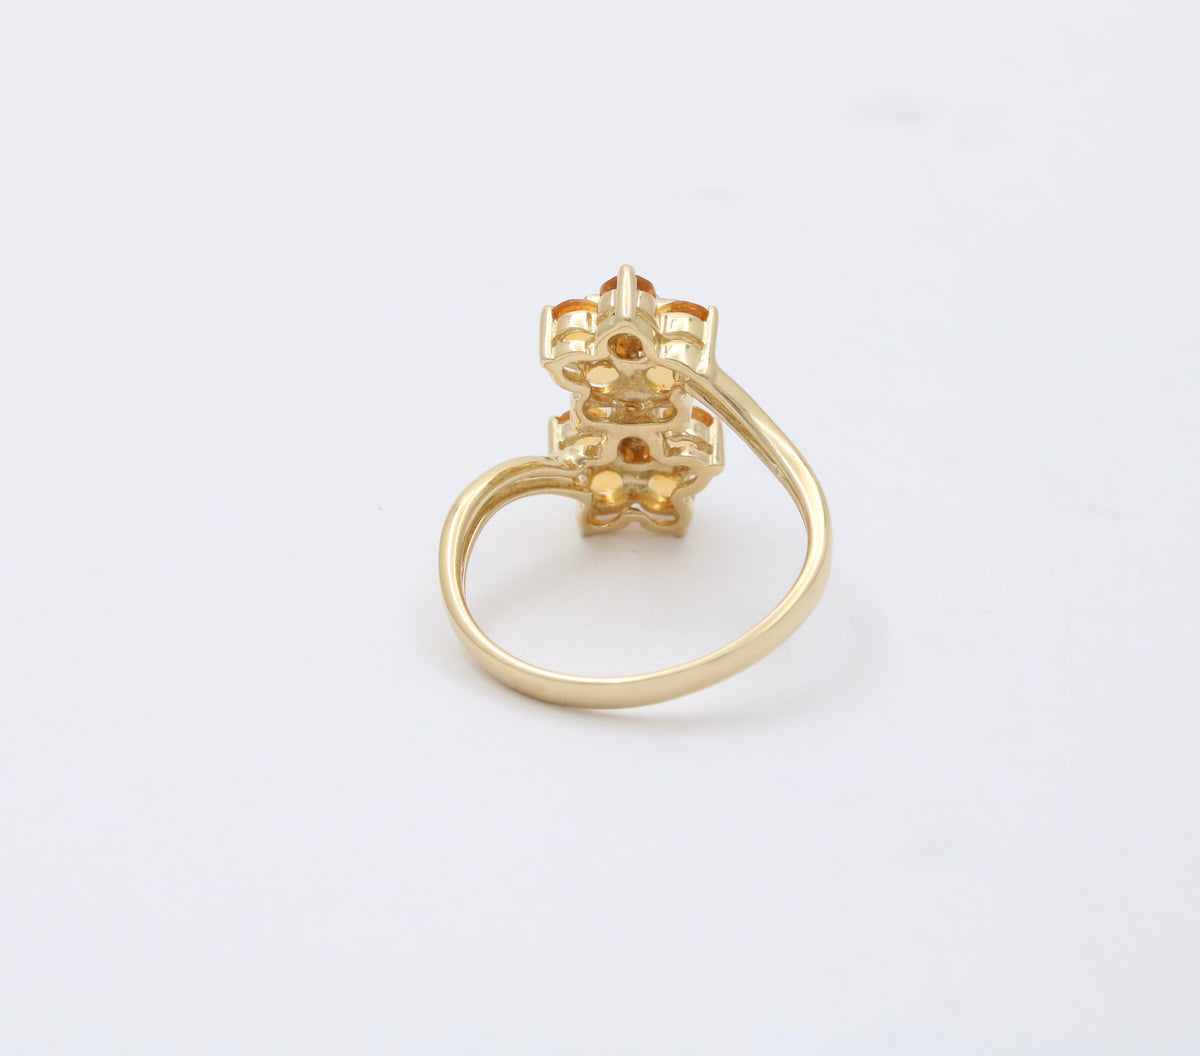 Vintage 14K Gold, Diamond, and Citrine Star Flower Bypass Ring